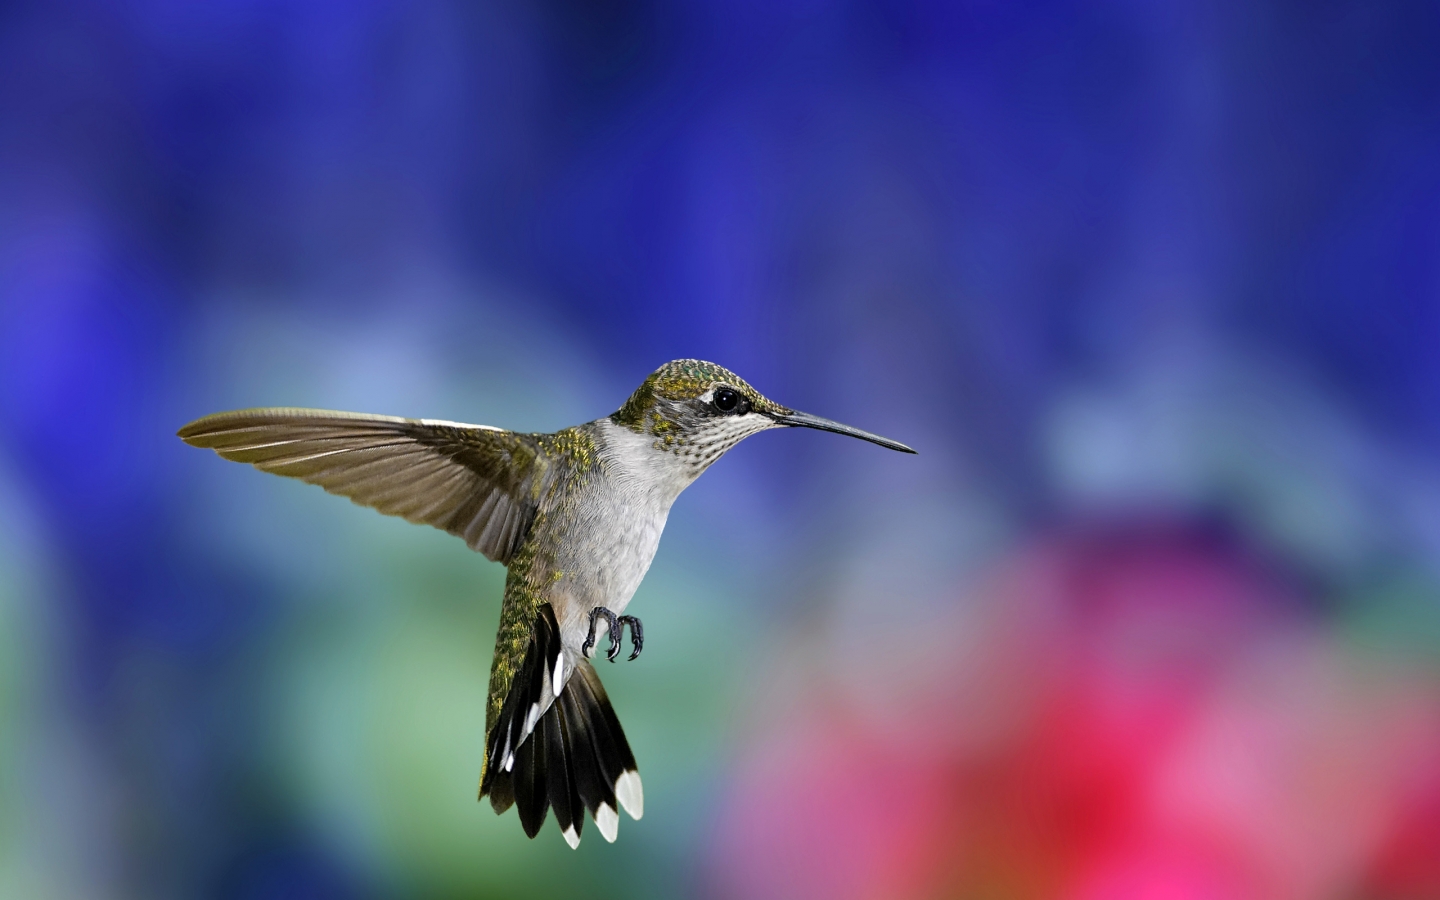 Colibri Bird for 1440 x 900 widescreen resolution